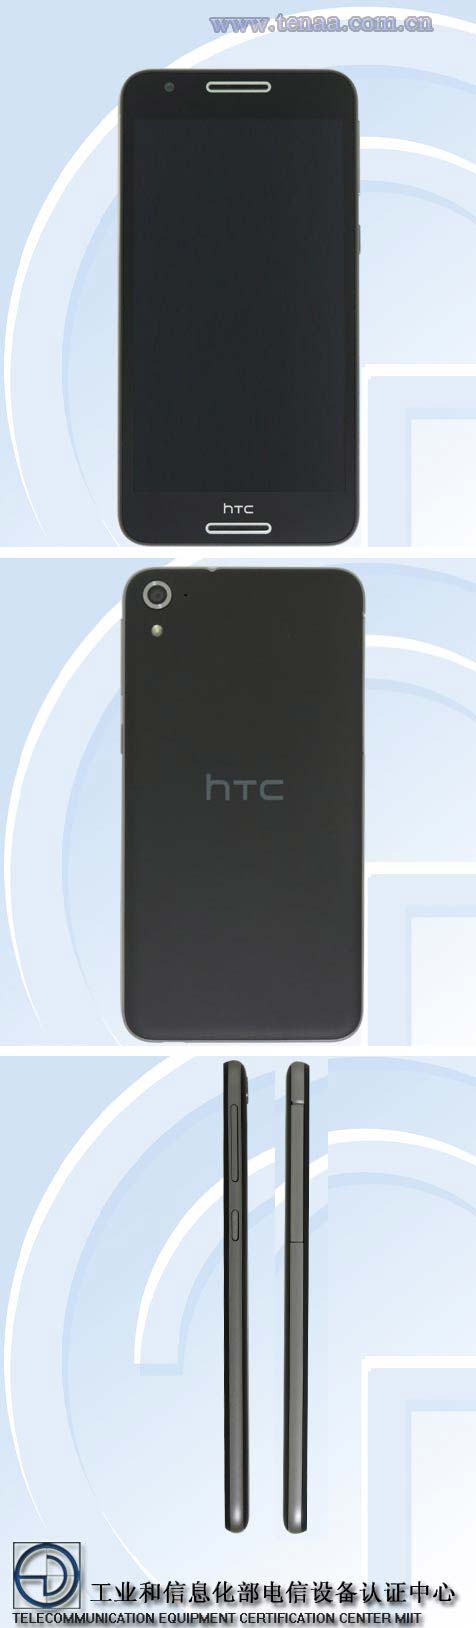 На фото устройство HTC WF5w